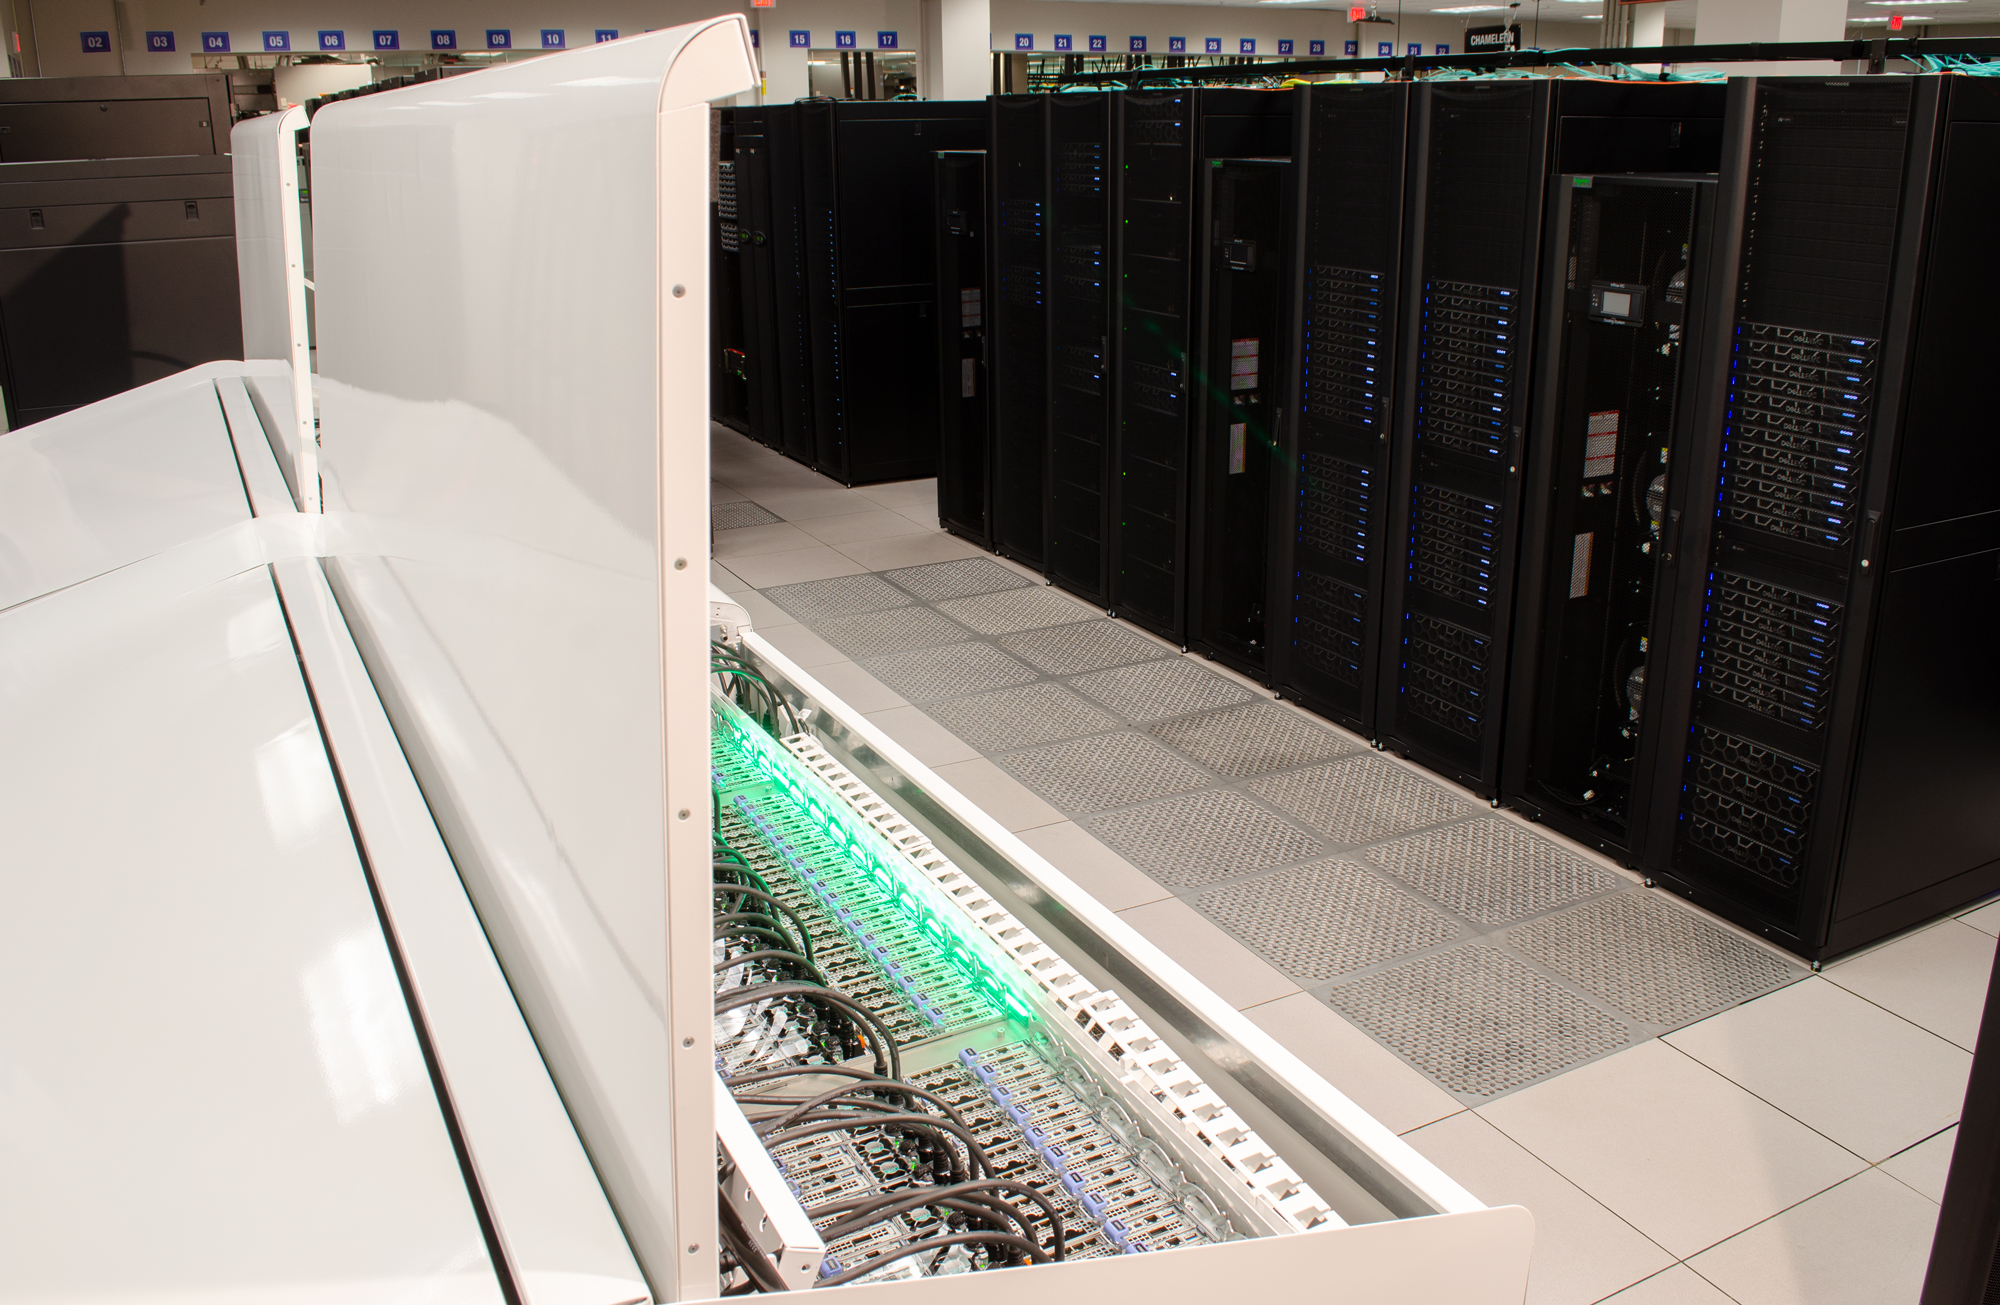 Close up view of supercomputer.